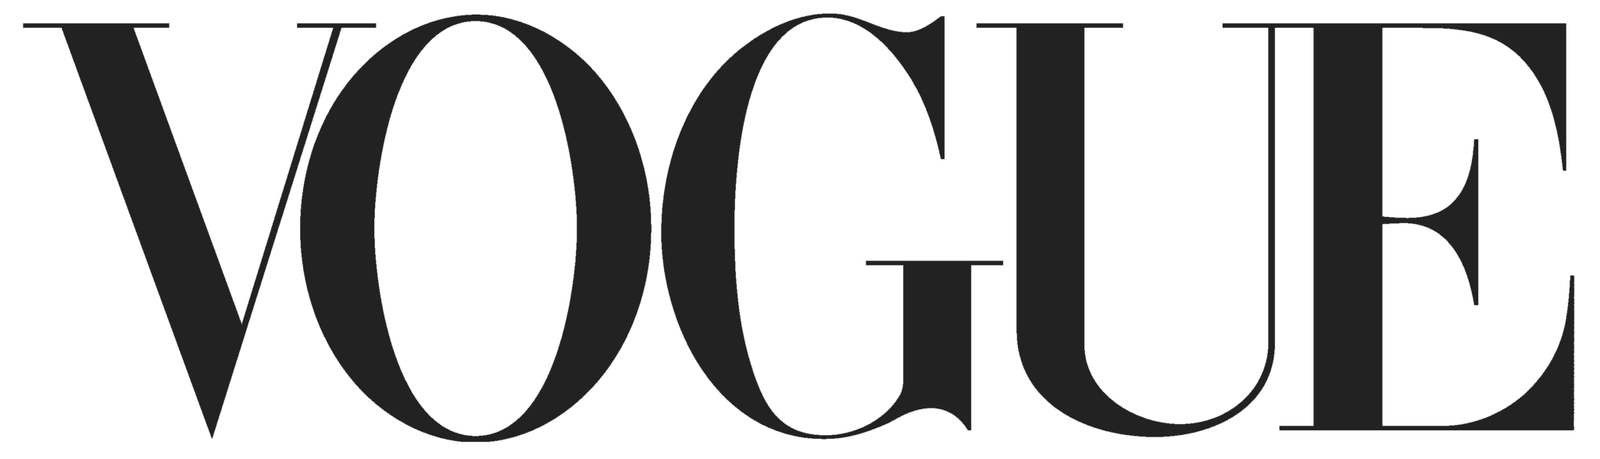 Vogue logo and Its History | LogoMyWay